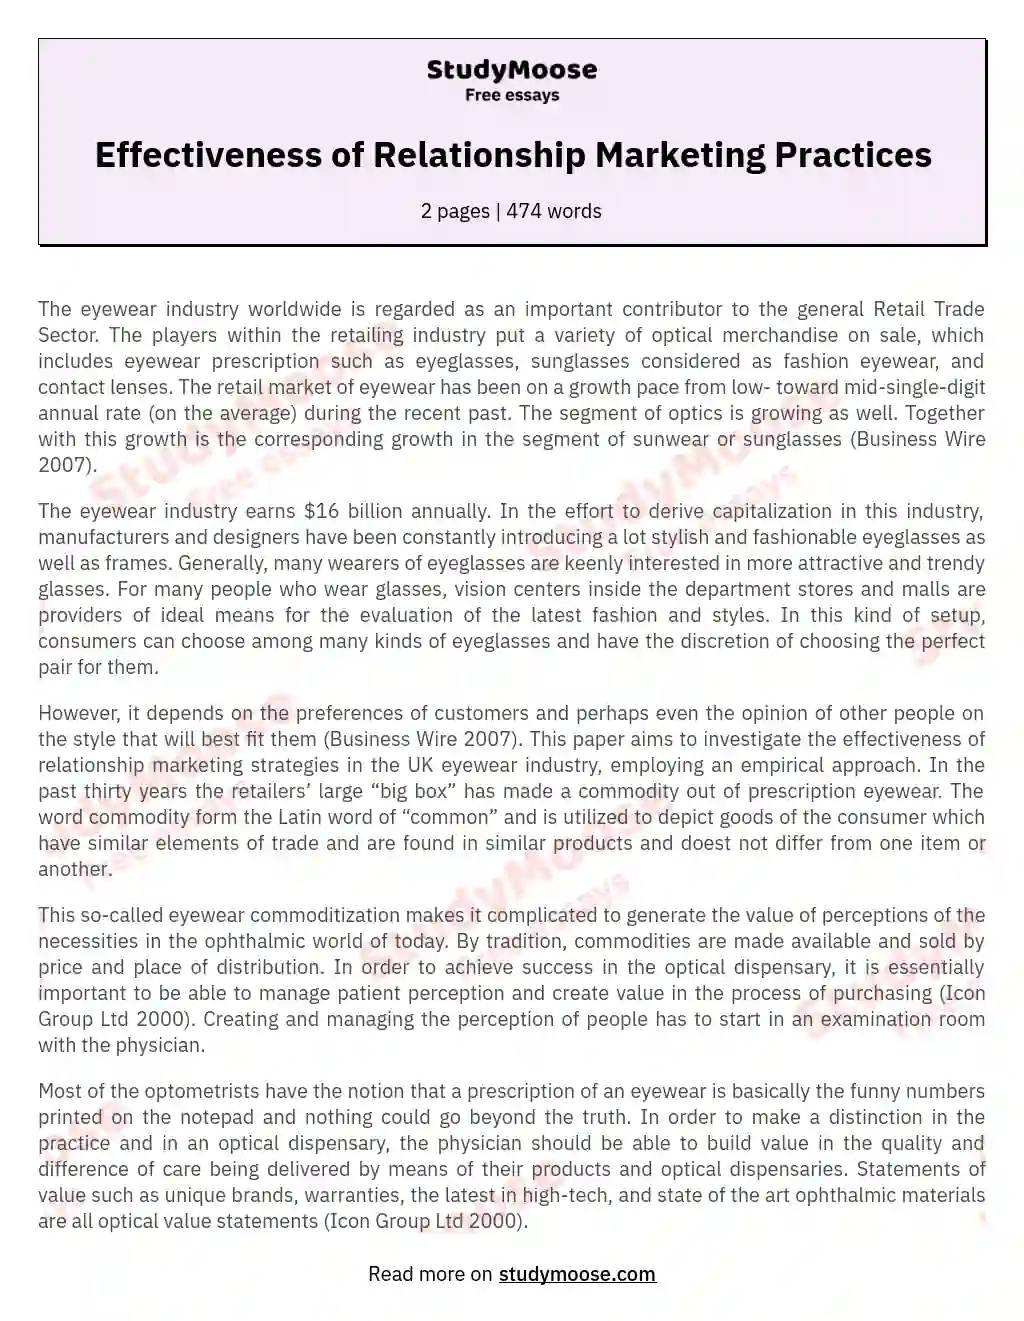 Effectiveness of Relationship Marketing Practices essay